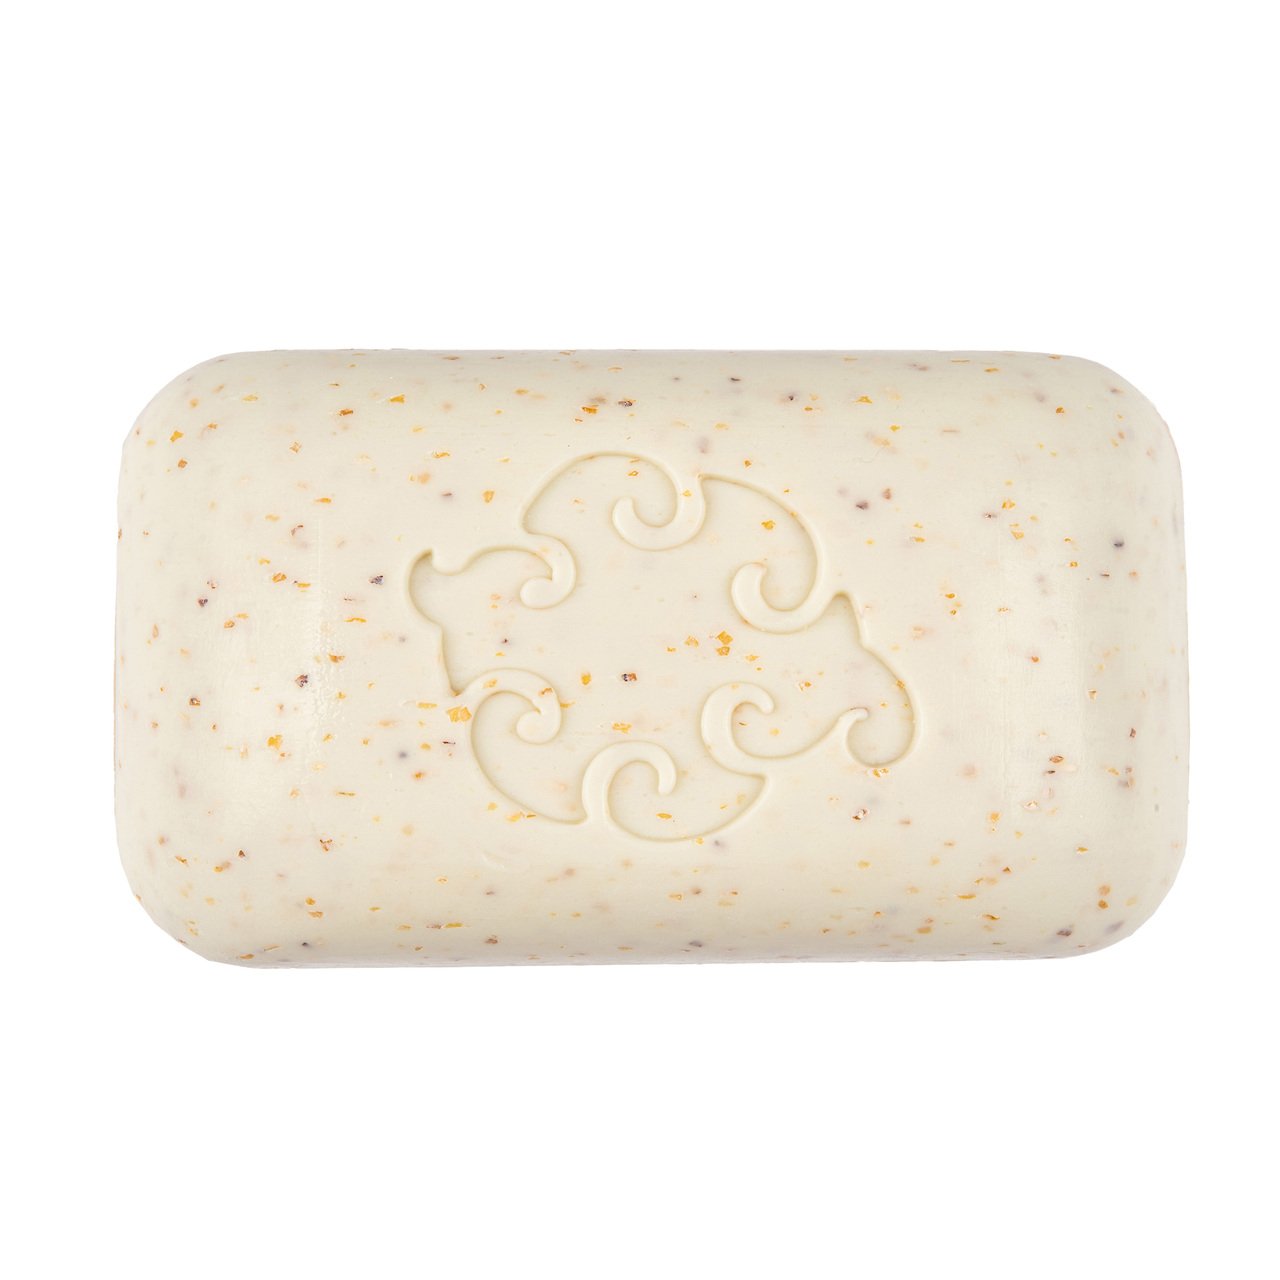 Loofa Mint Soap